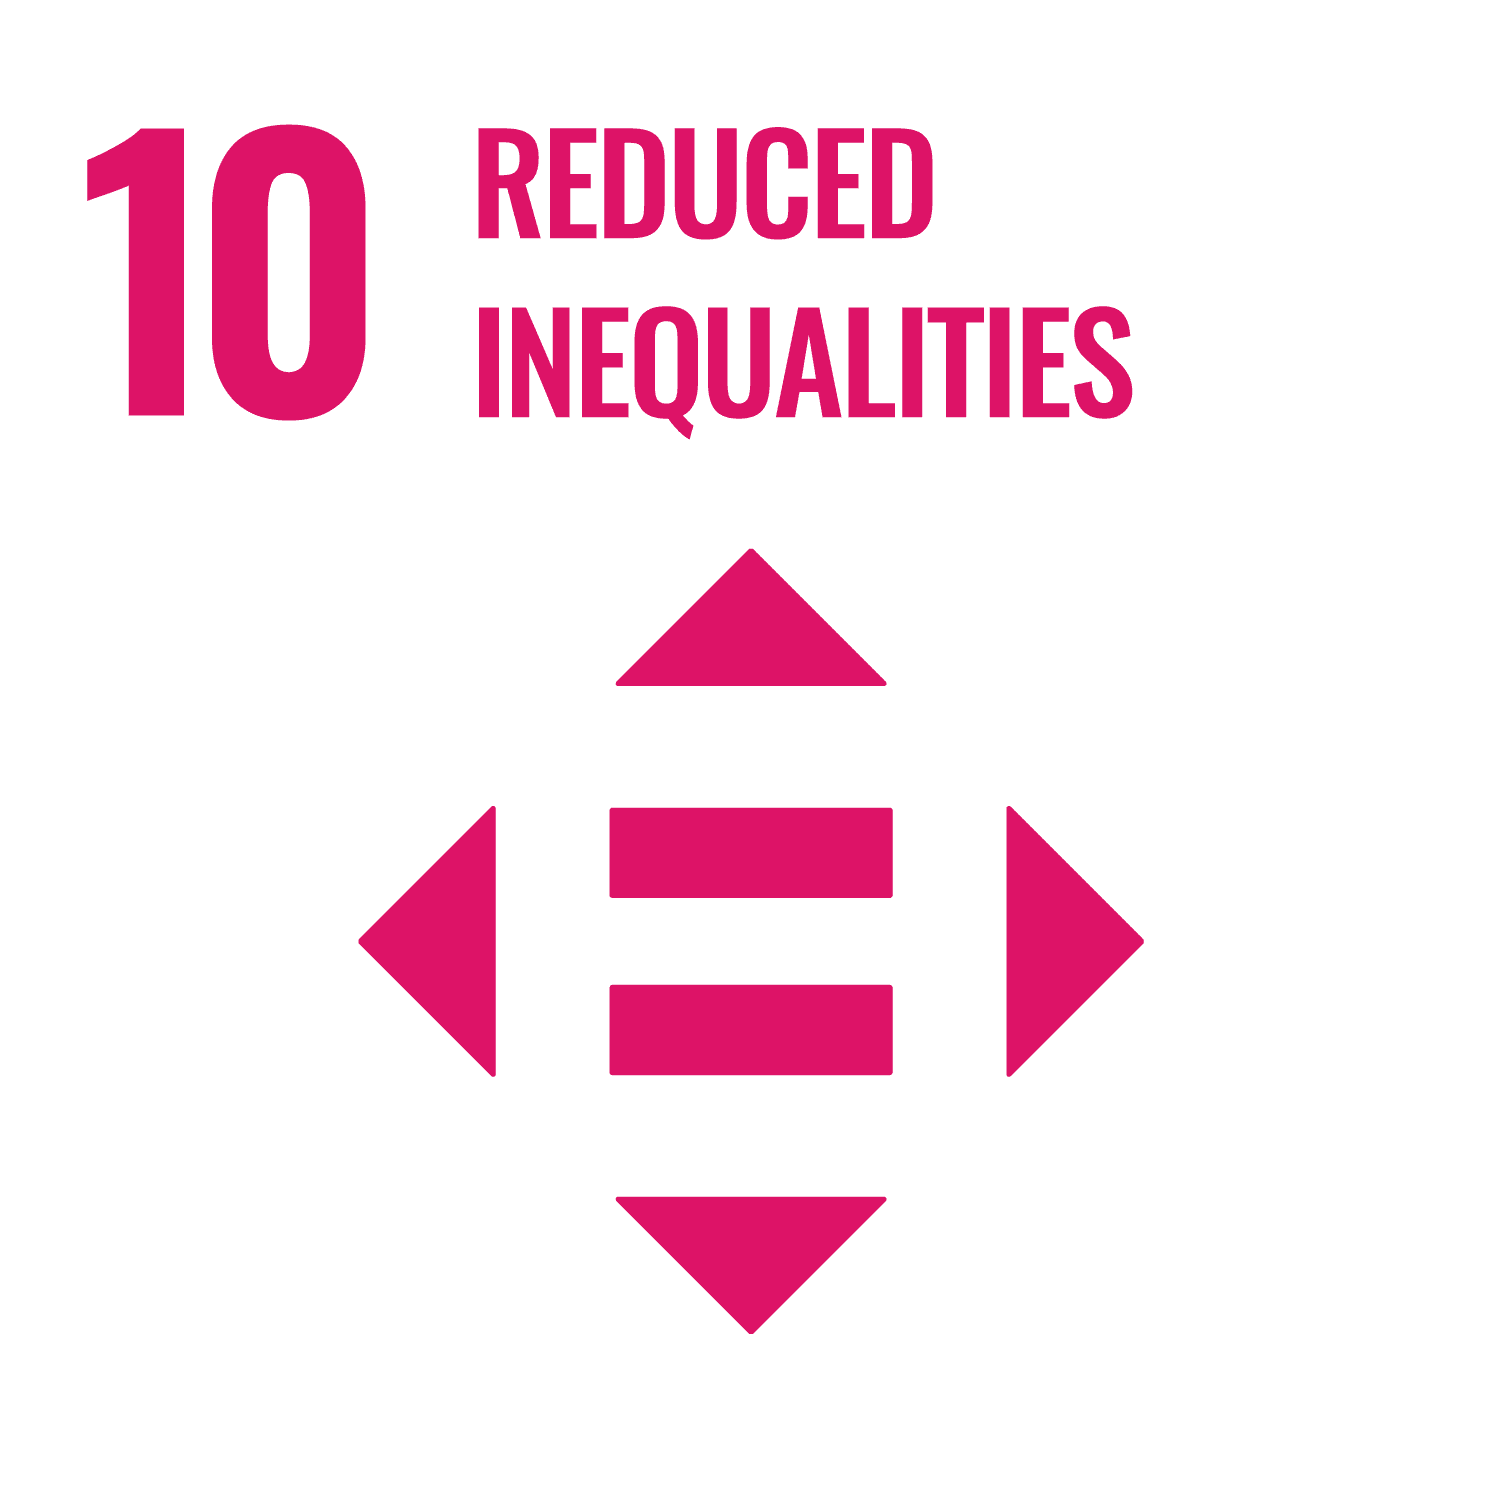 UN Sustainable Development Goal number 10